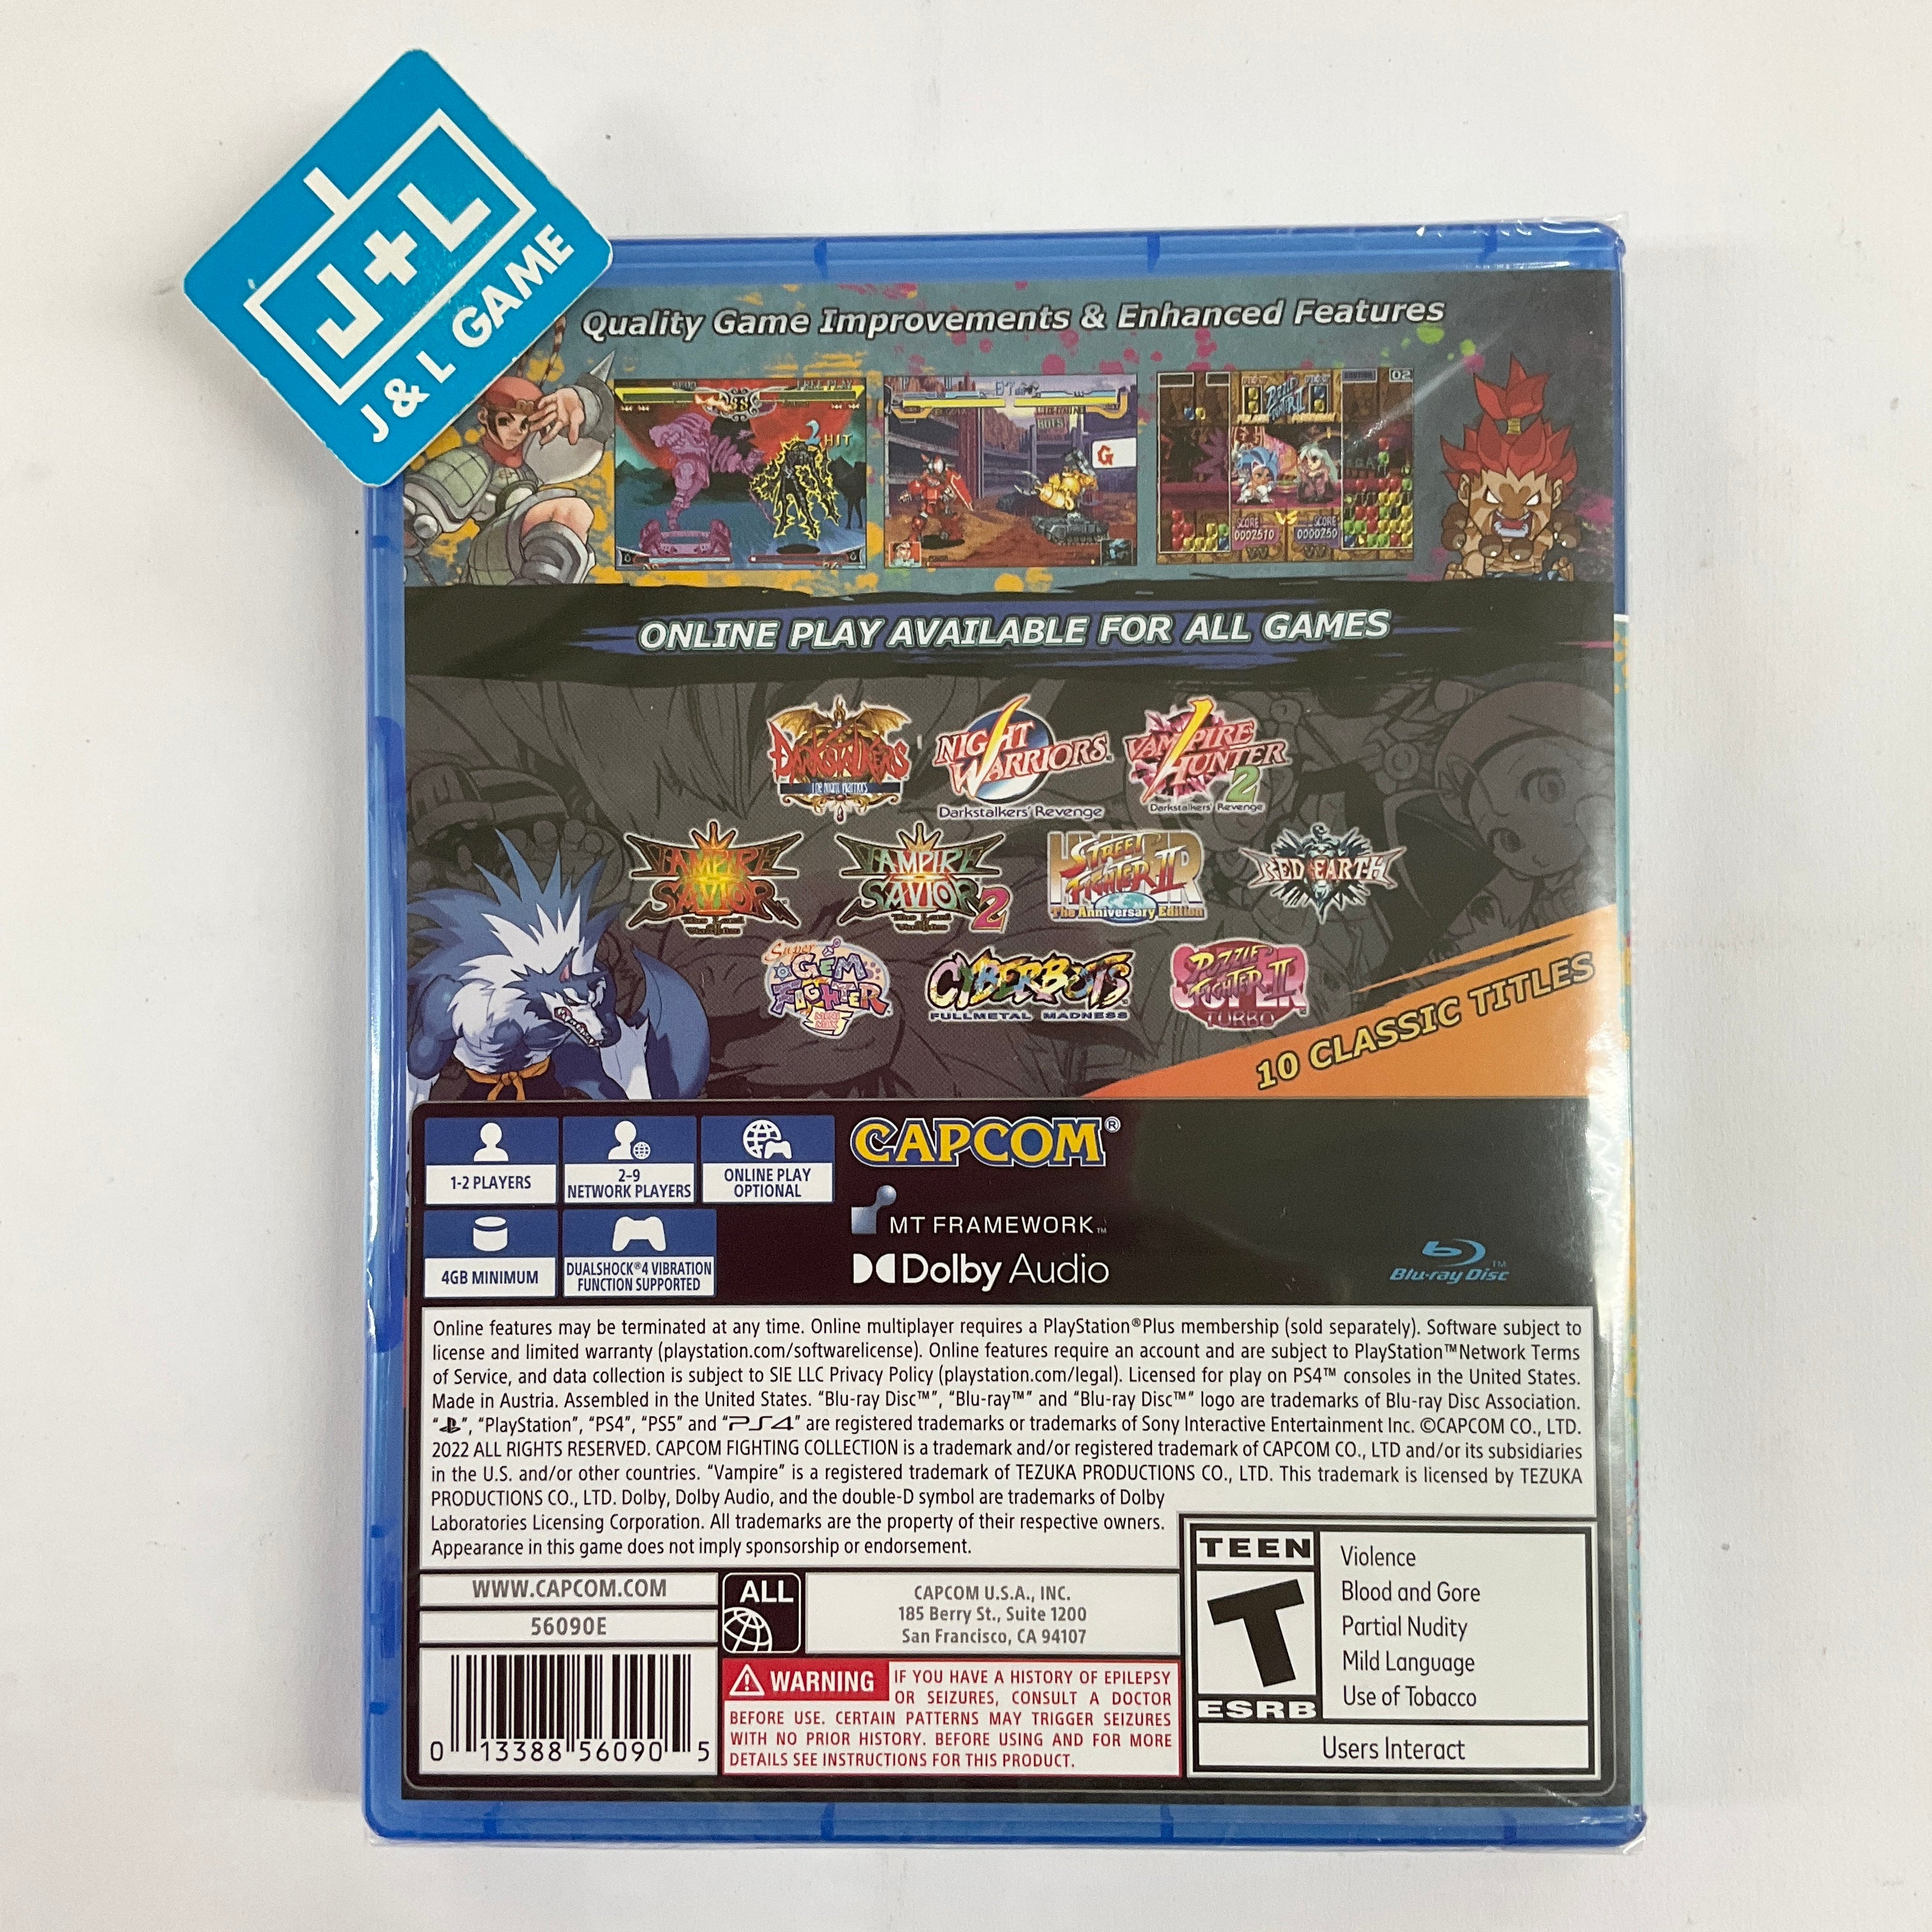 Capcom Fighting Collection - (PS4) PlayStation 4 Video Games Capcom   